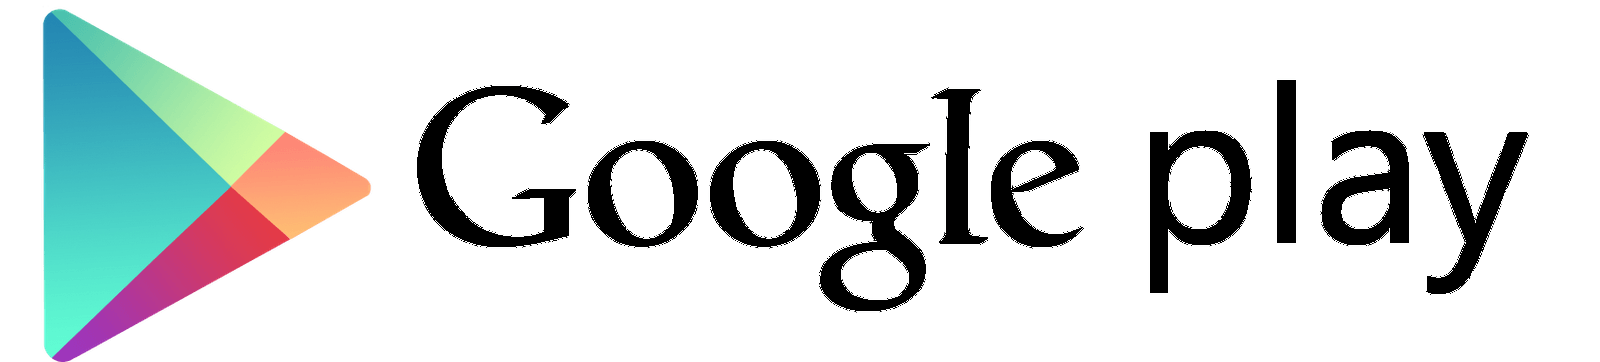 Google Play Logo - Google-Play-logo-black - Exposure